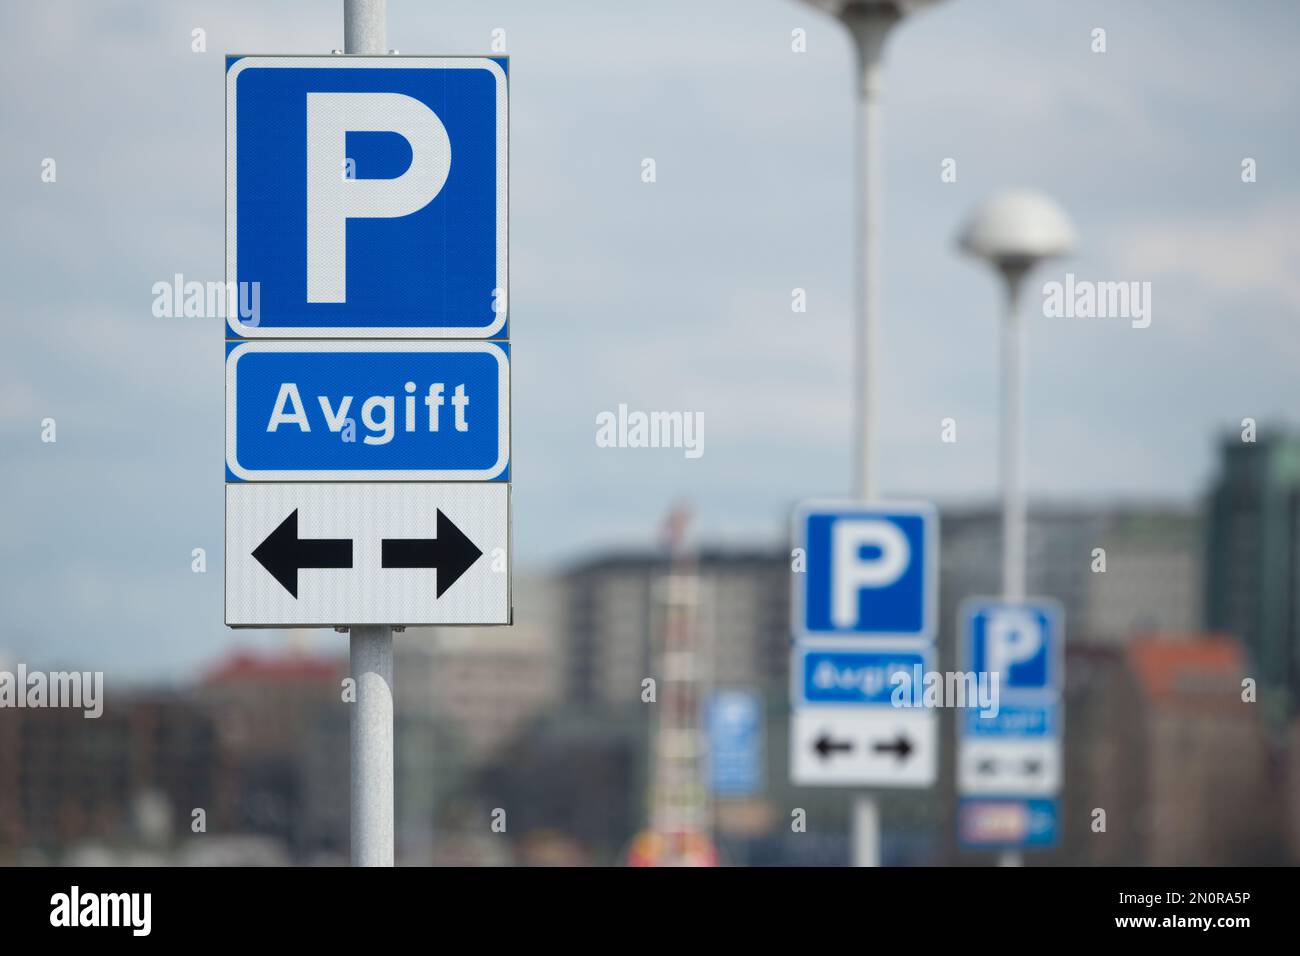 Swedish parking signs Stock Photo